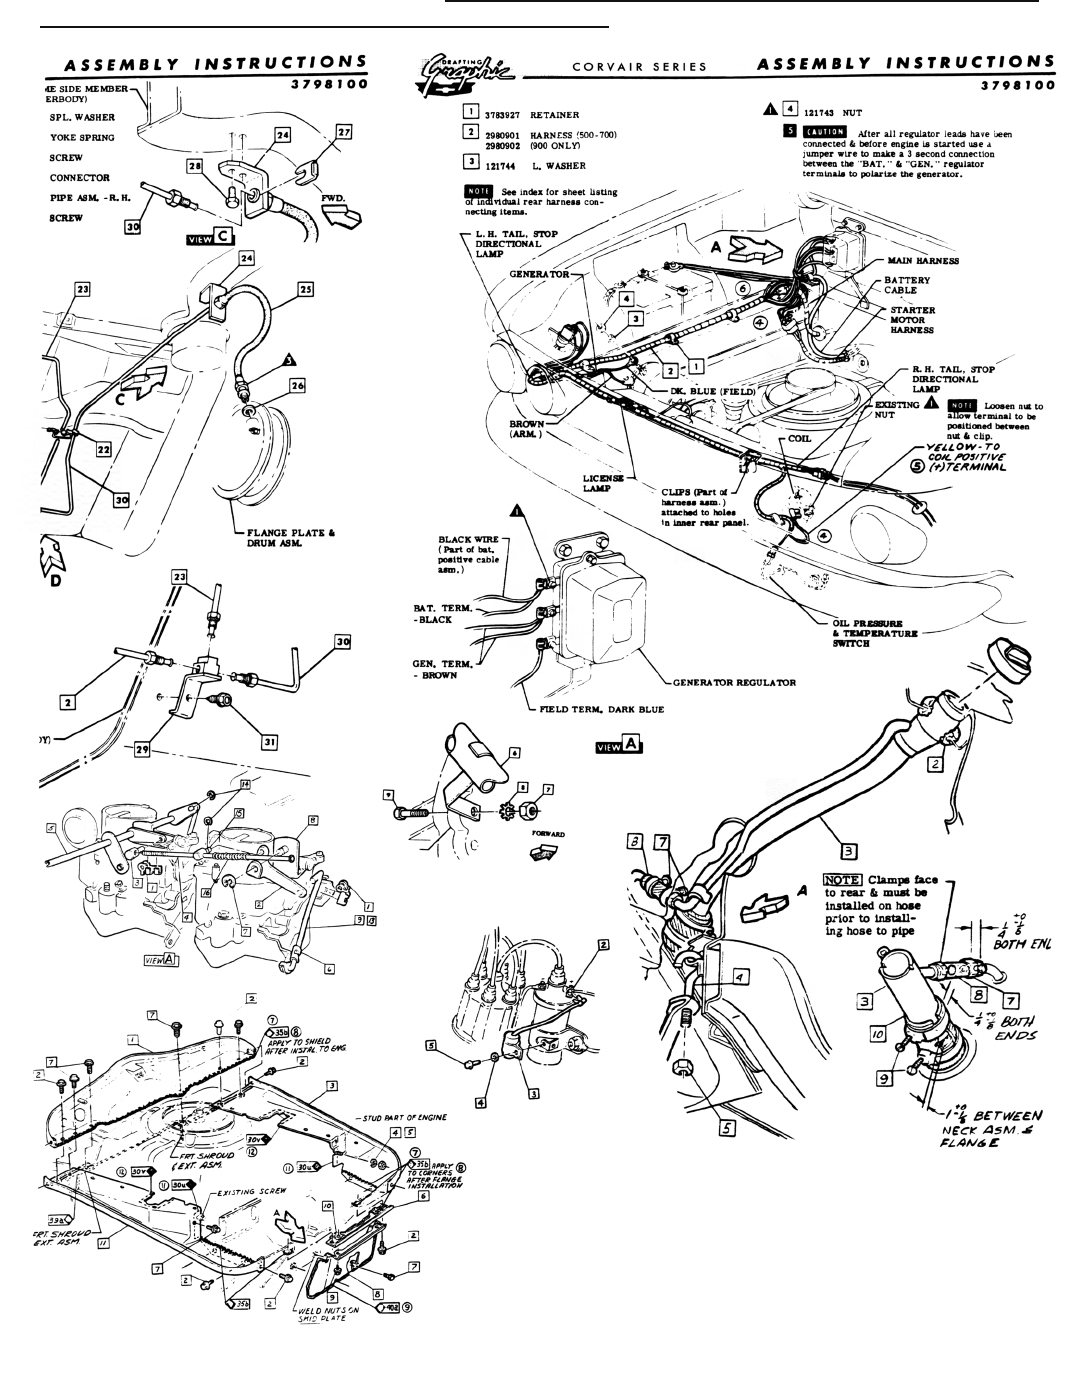 Clark's Corvair Parts, Inc. - Corvair Parts Catalog - 12,000 parts pg